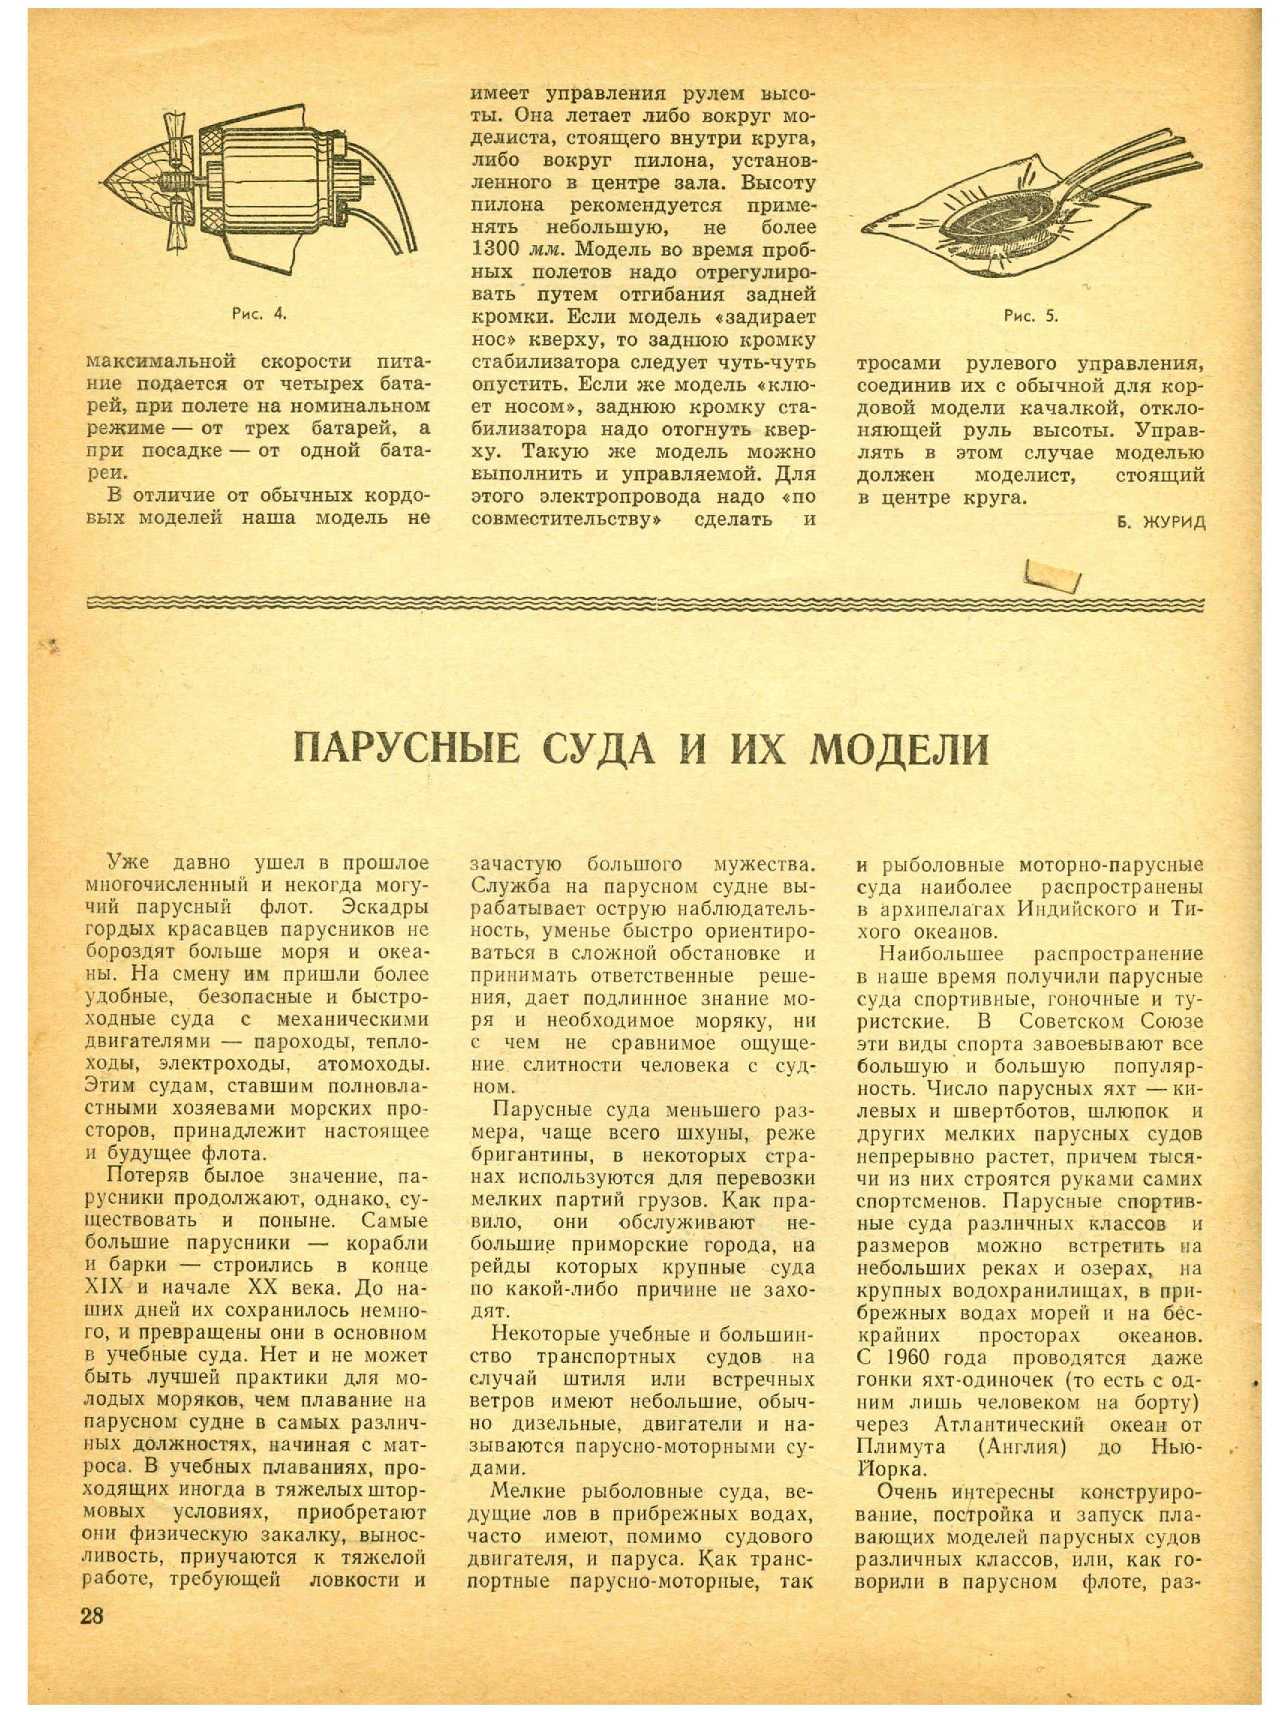 ЮМК 13, 1965, 28 c.